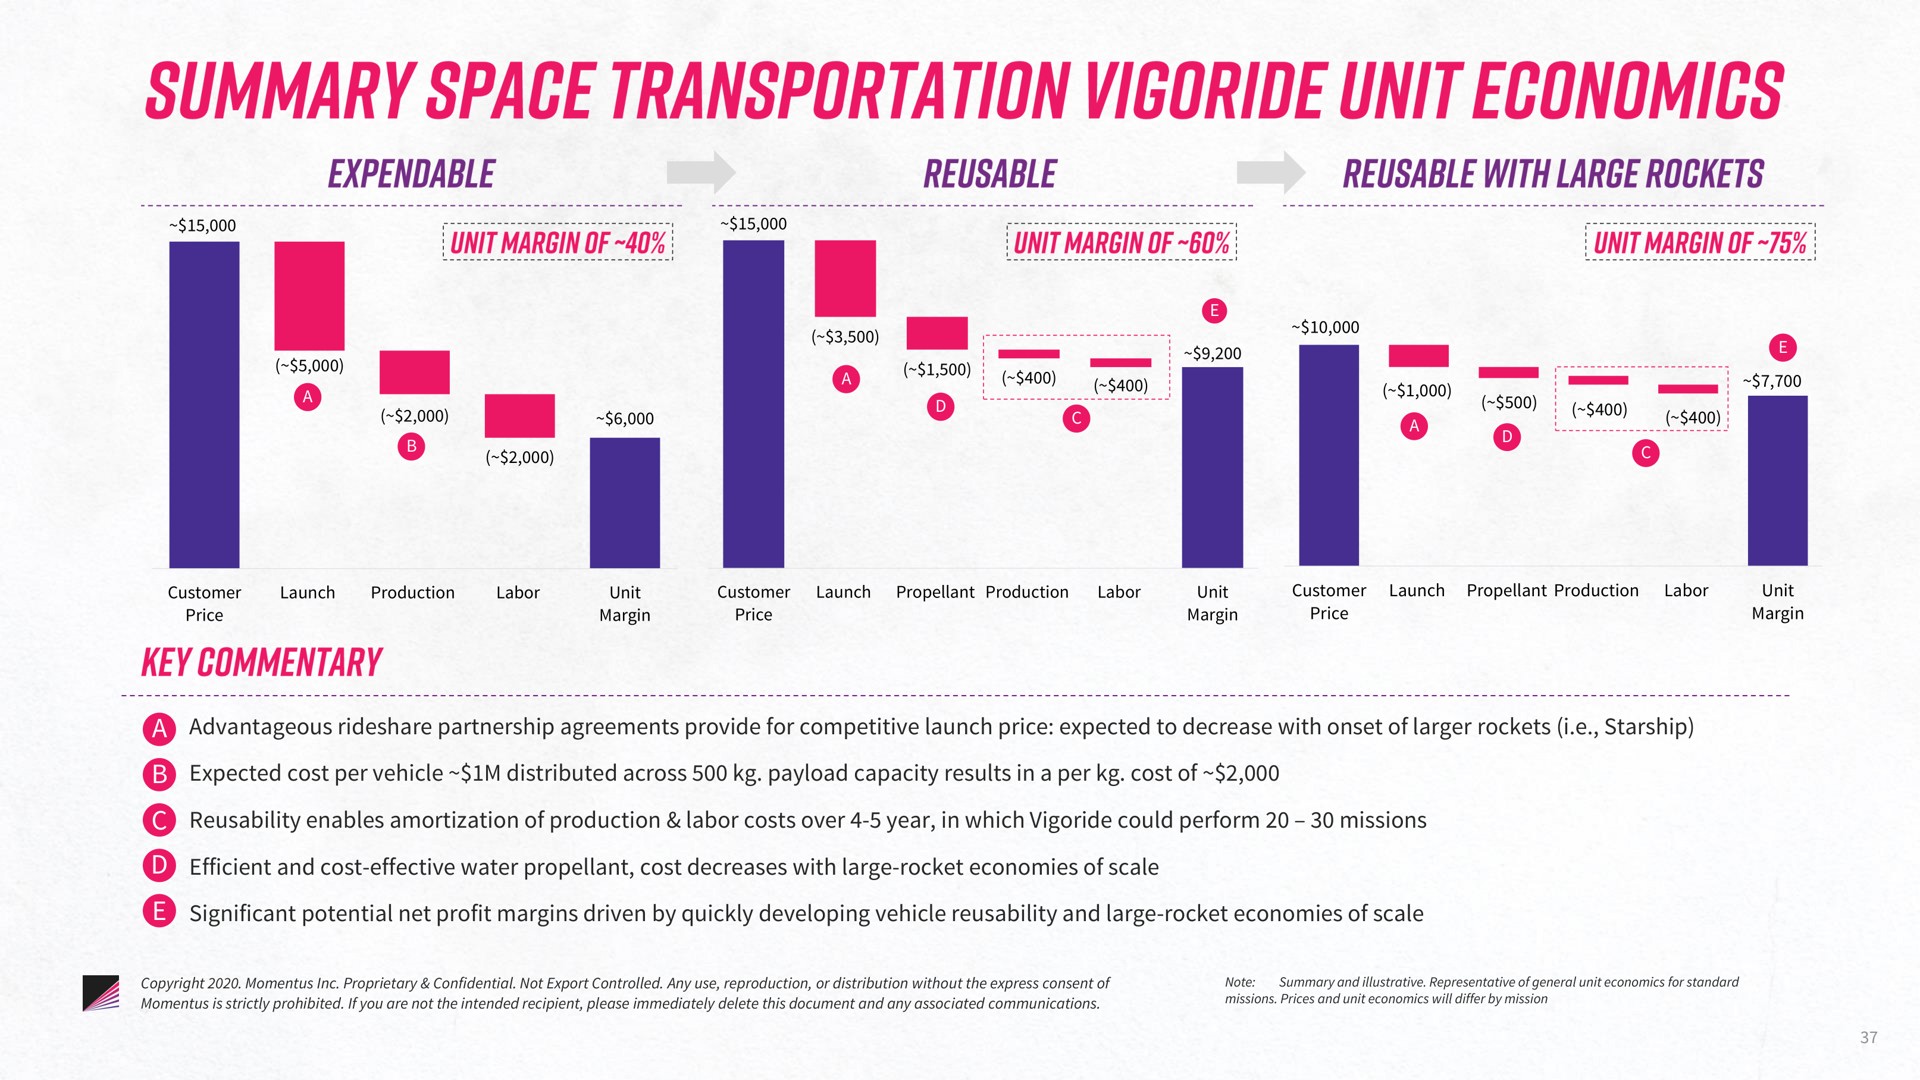 summary space transportation unit economics | Momentus